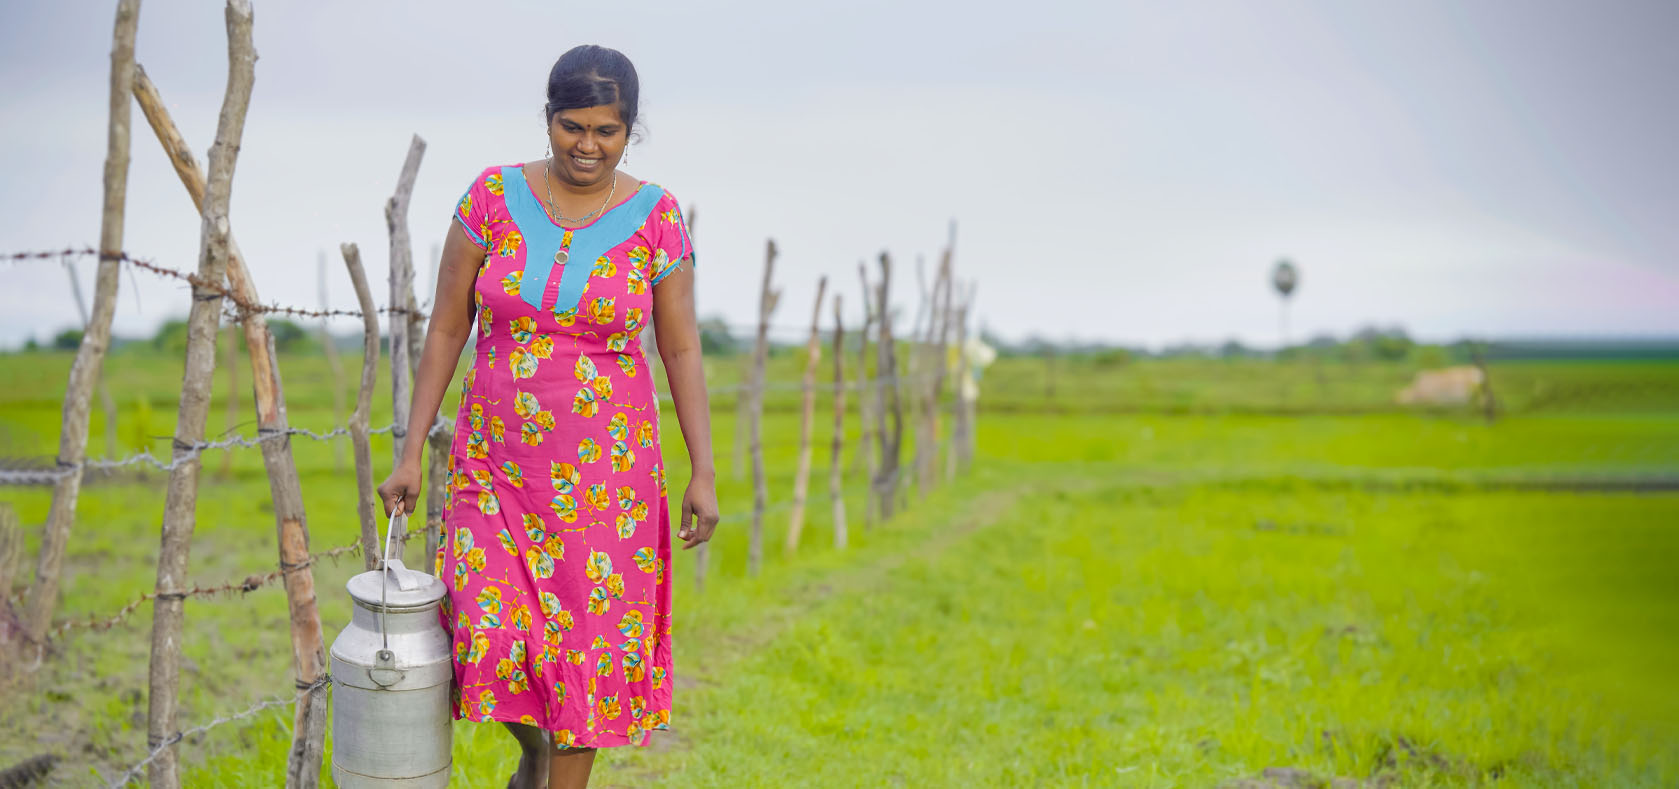 Mathan Justin Annamma. Photo: UN Women Sri Lanka/Raveendra Rohana